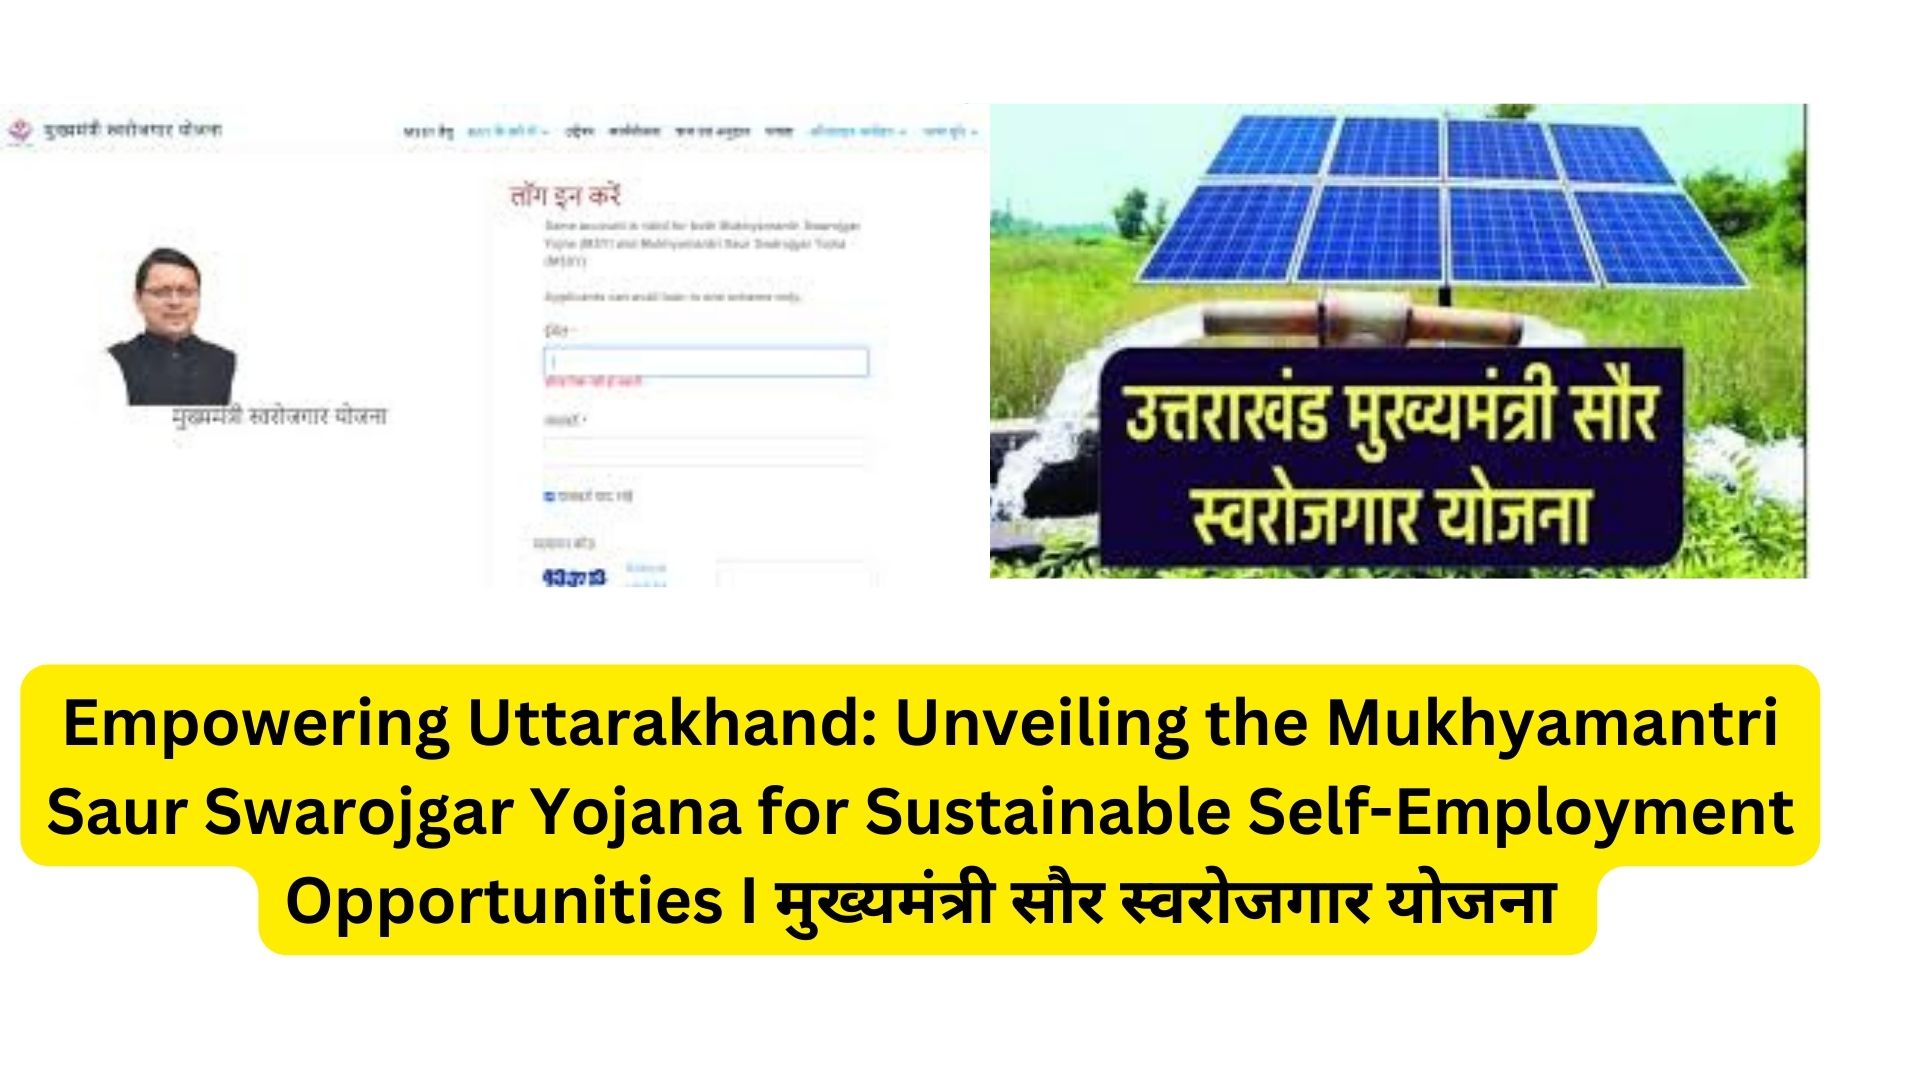 Empowering Uttarakhand: Unveiling the Mukhyamantri Saur Swarojgar Yojana for Sustainable Self-Employment Opportunities I मुख्यमंत्री सौर स्वरोजगार योजना